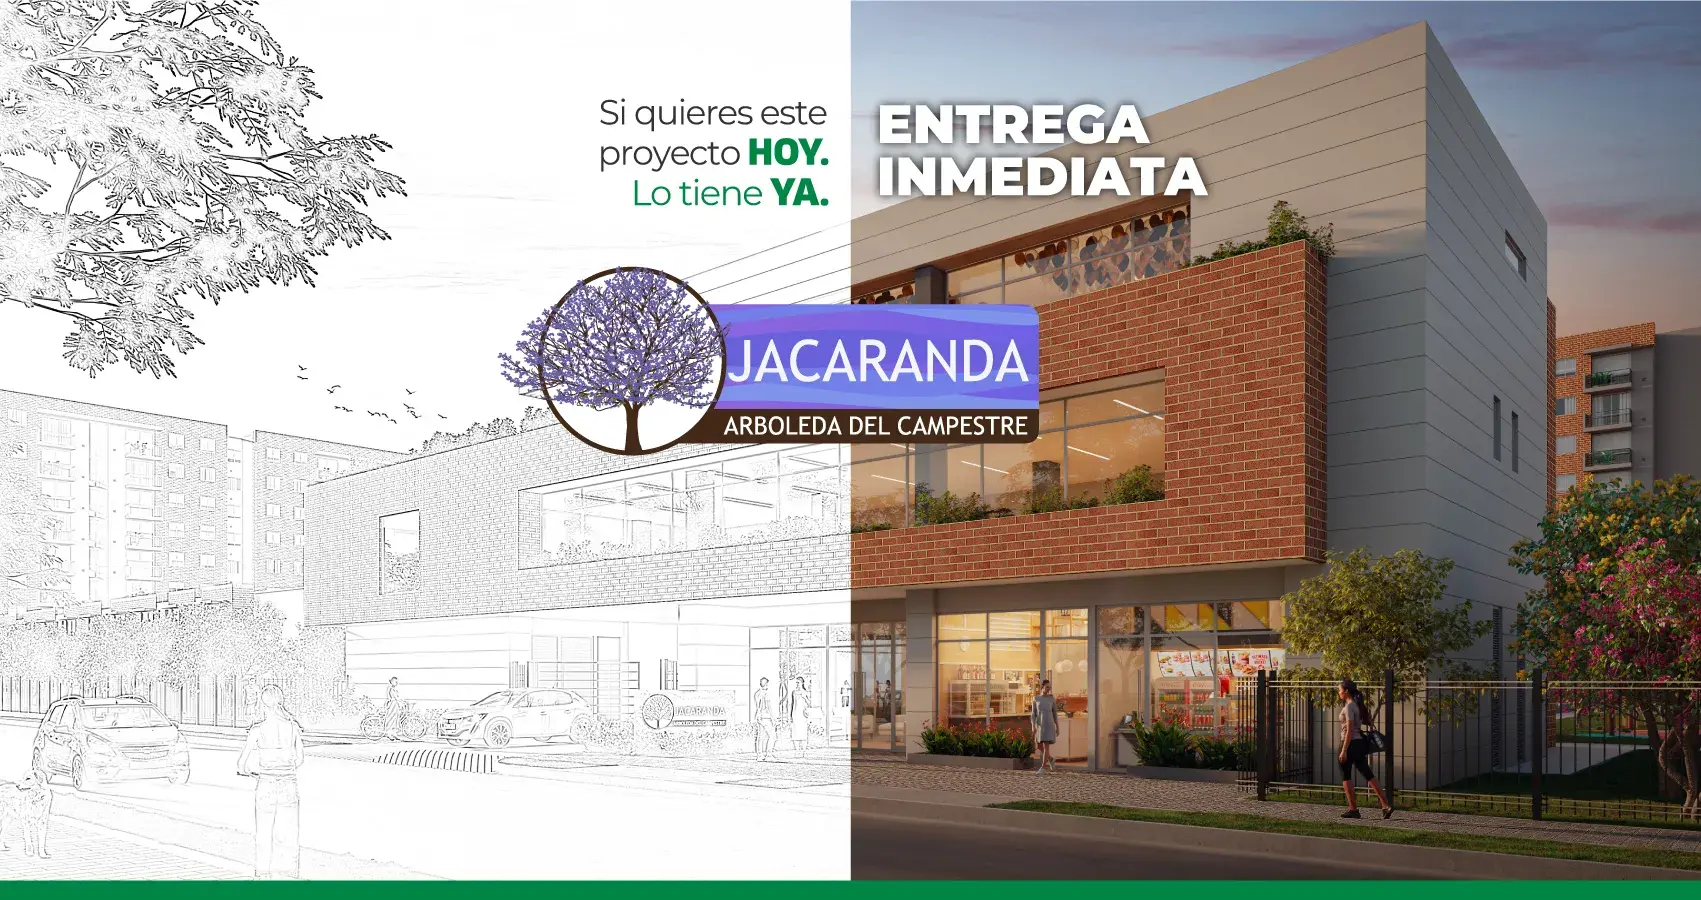 Imagen informativa entrega inmediata proyecto Jacaranda